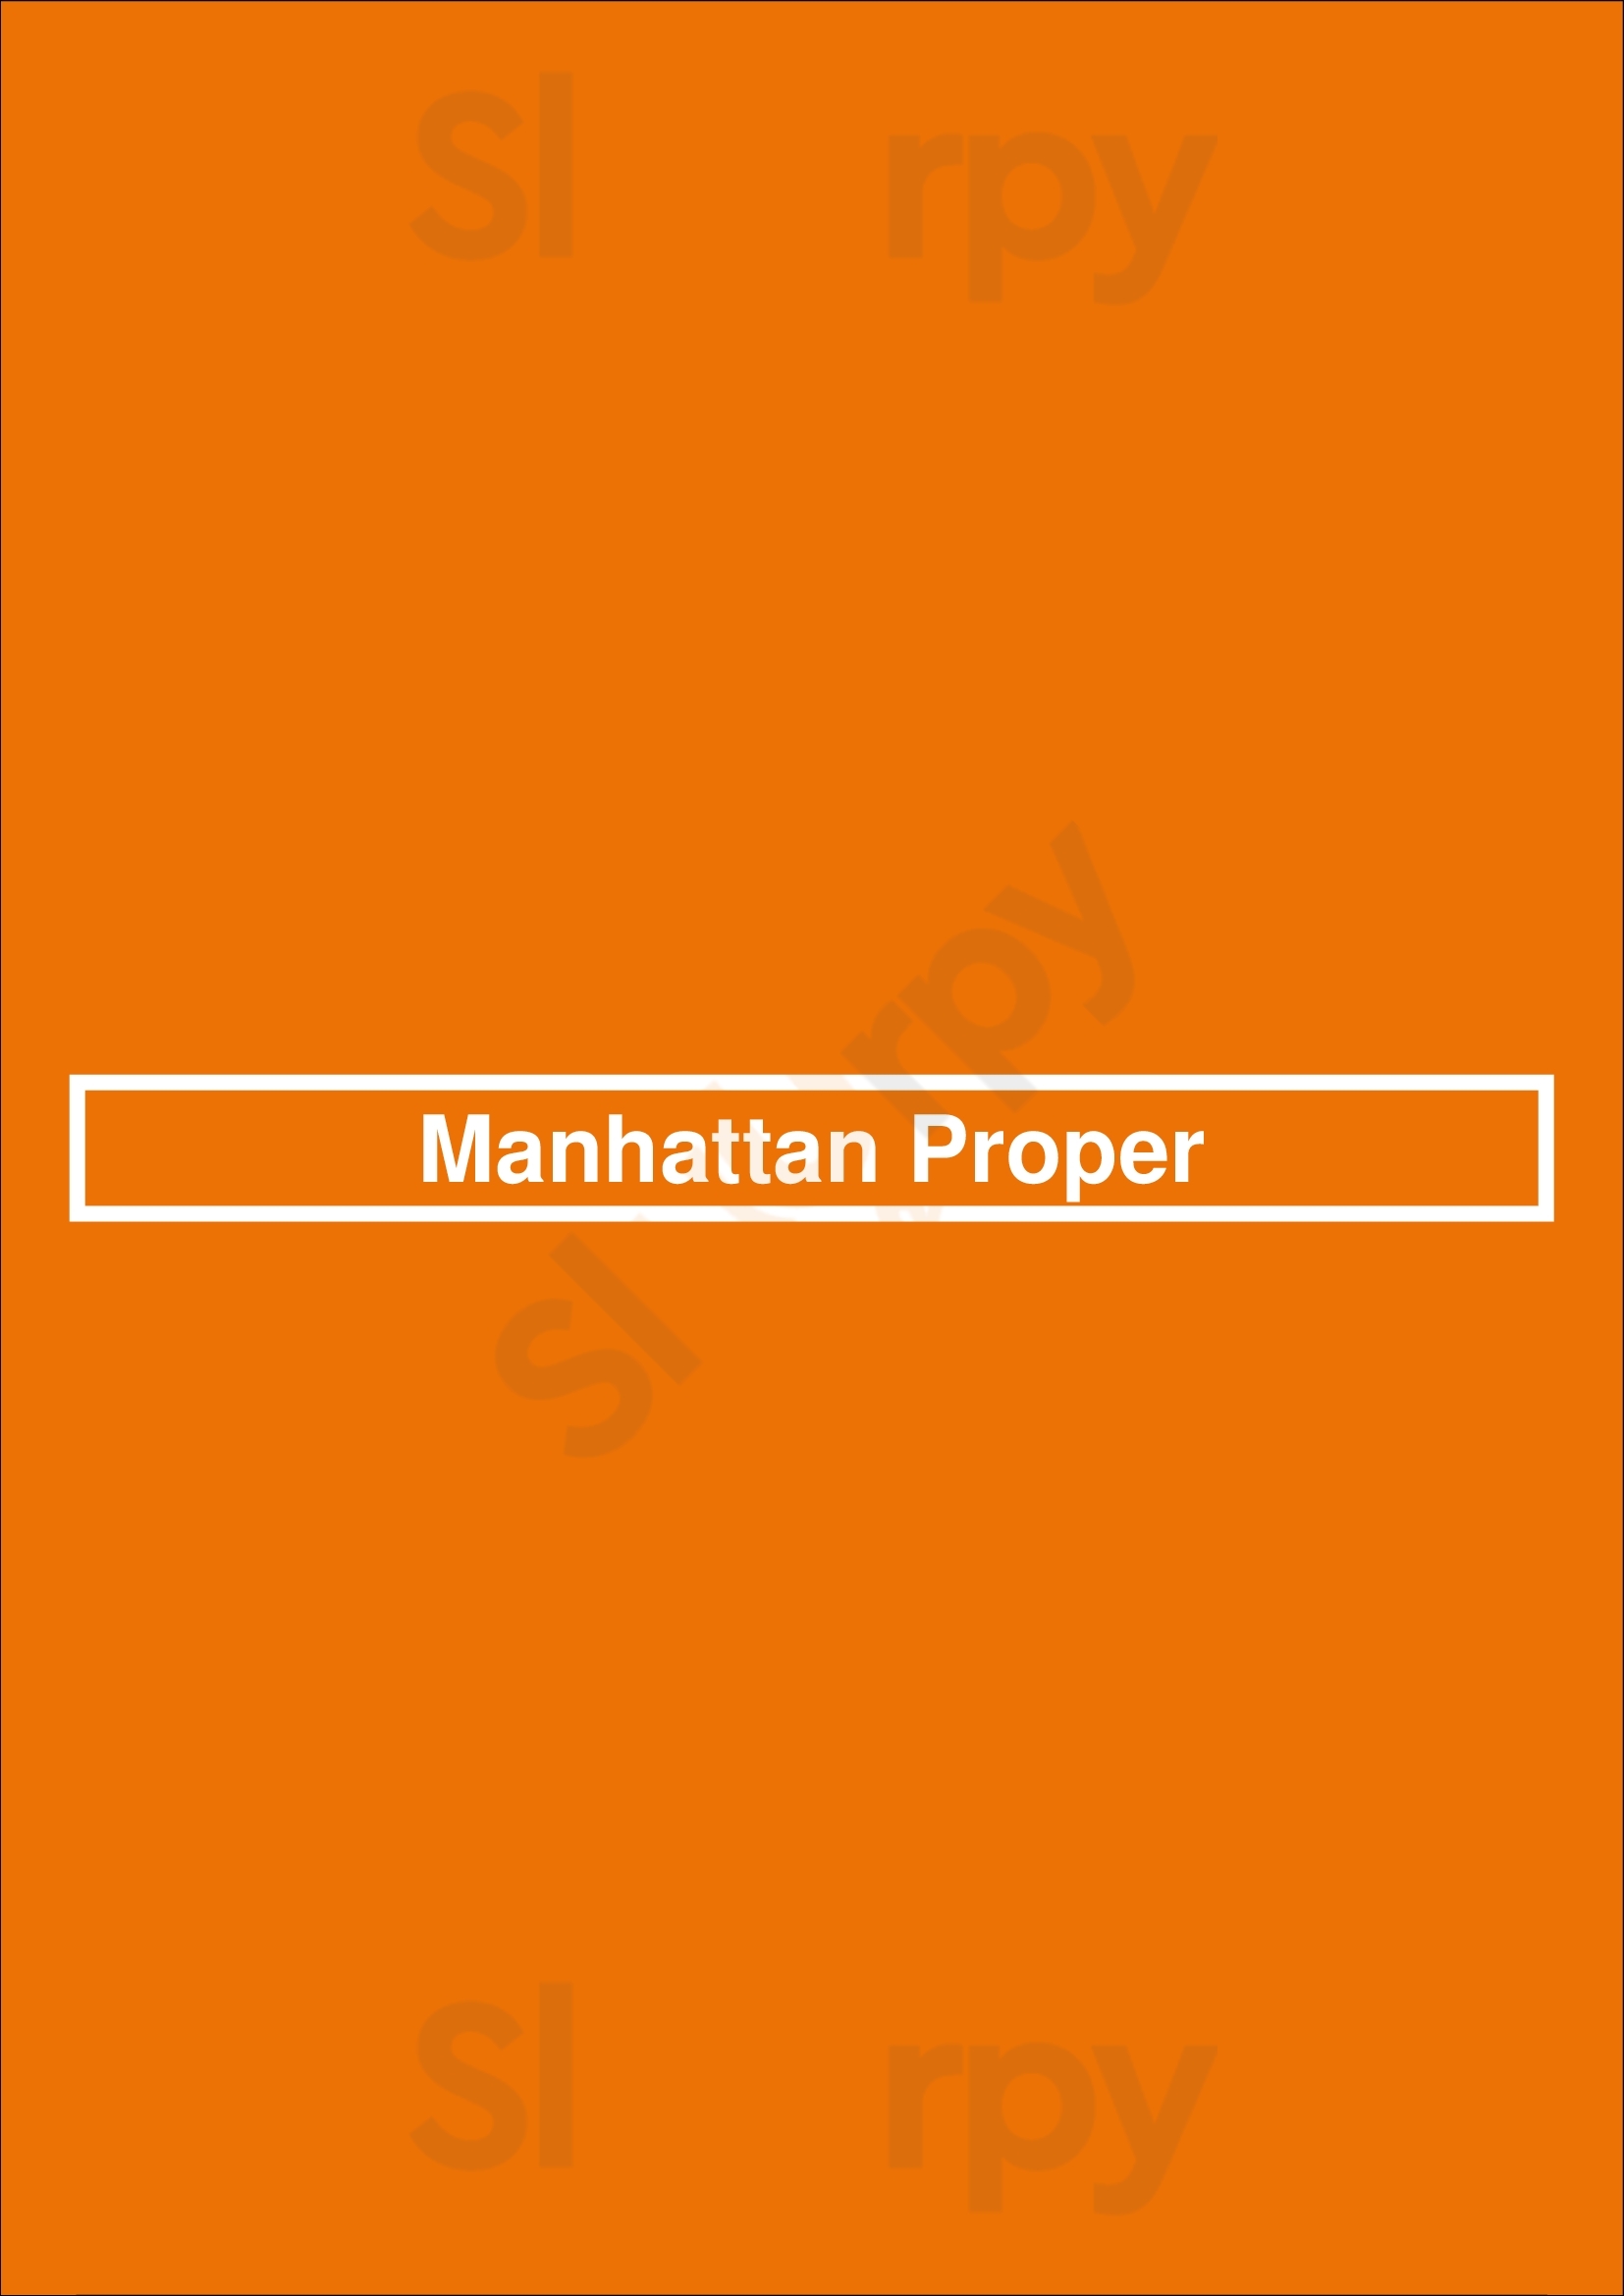 Manhattan Proper New York City Menu - 1